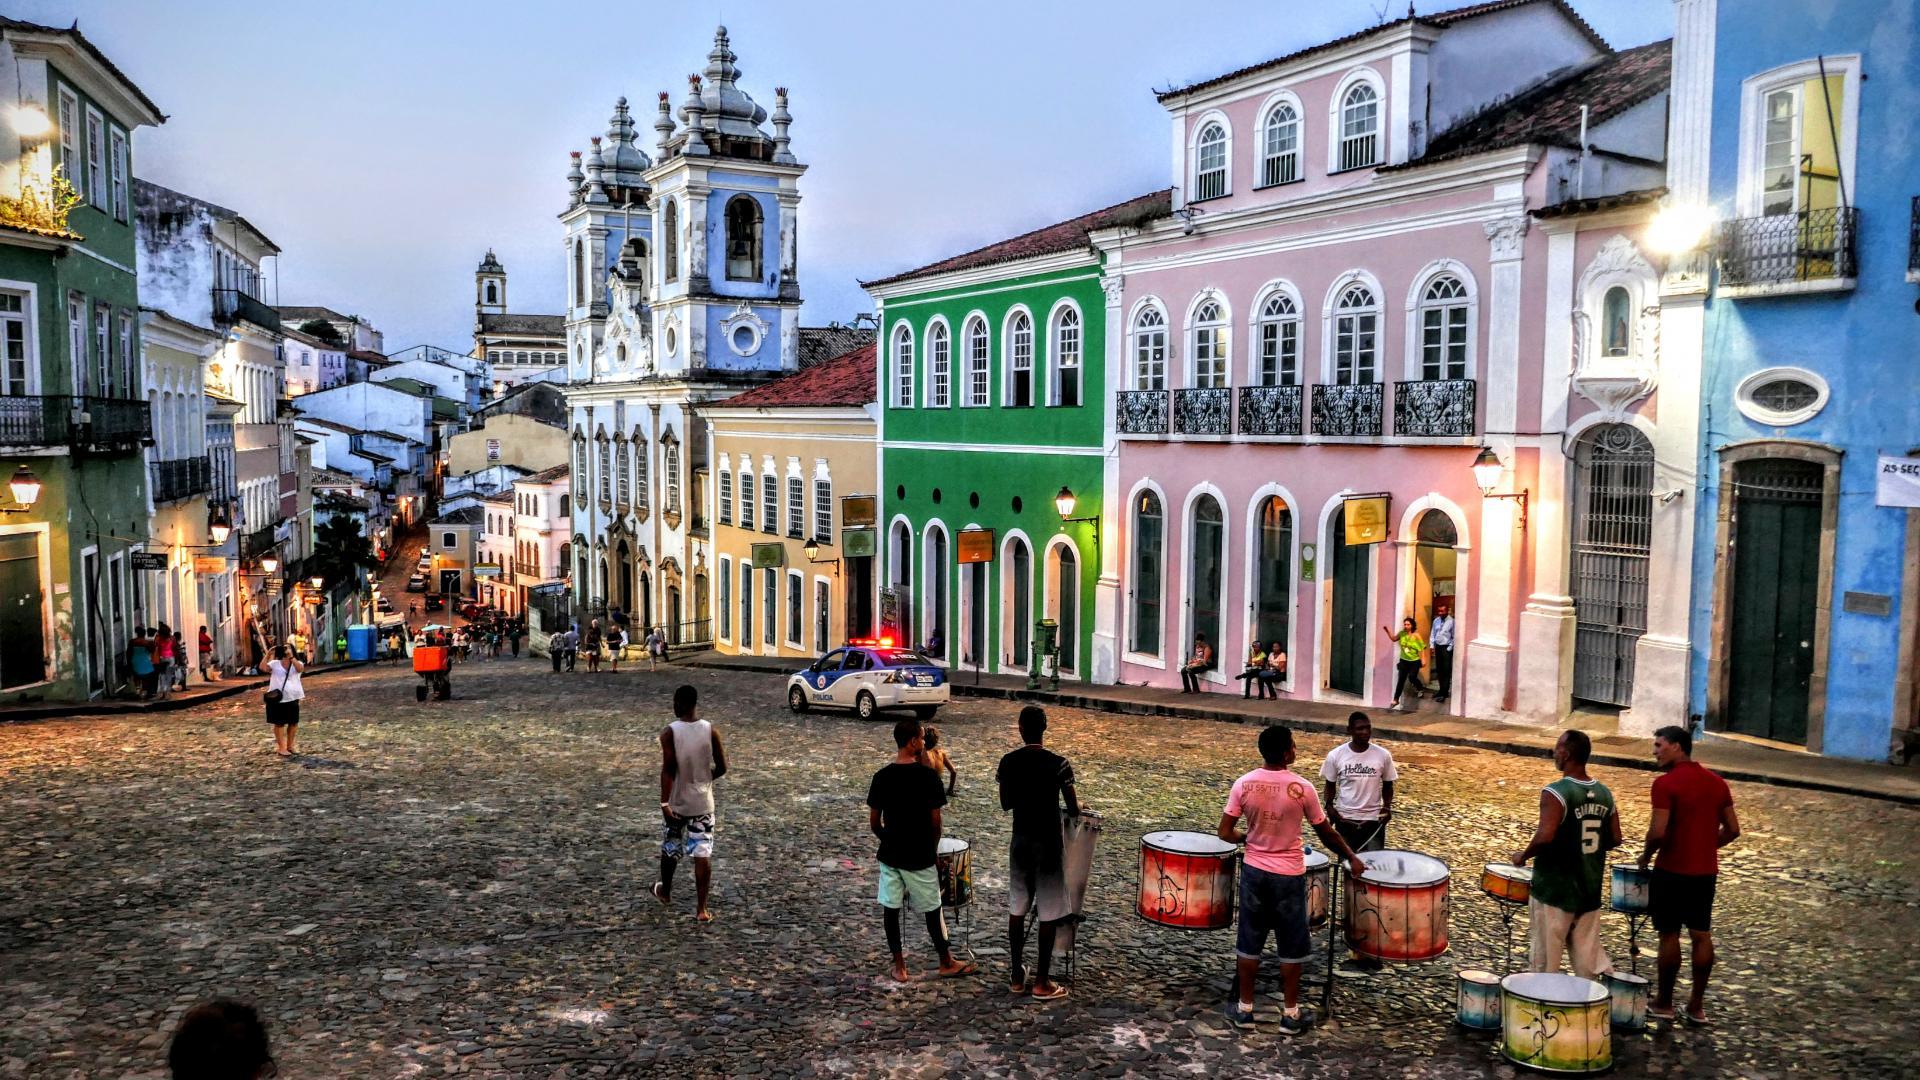 Drummers on the street in Pelourinho, Salvador.